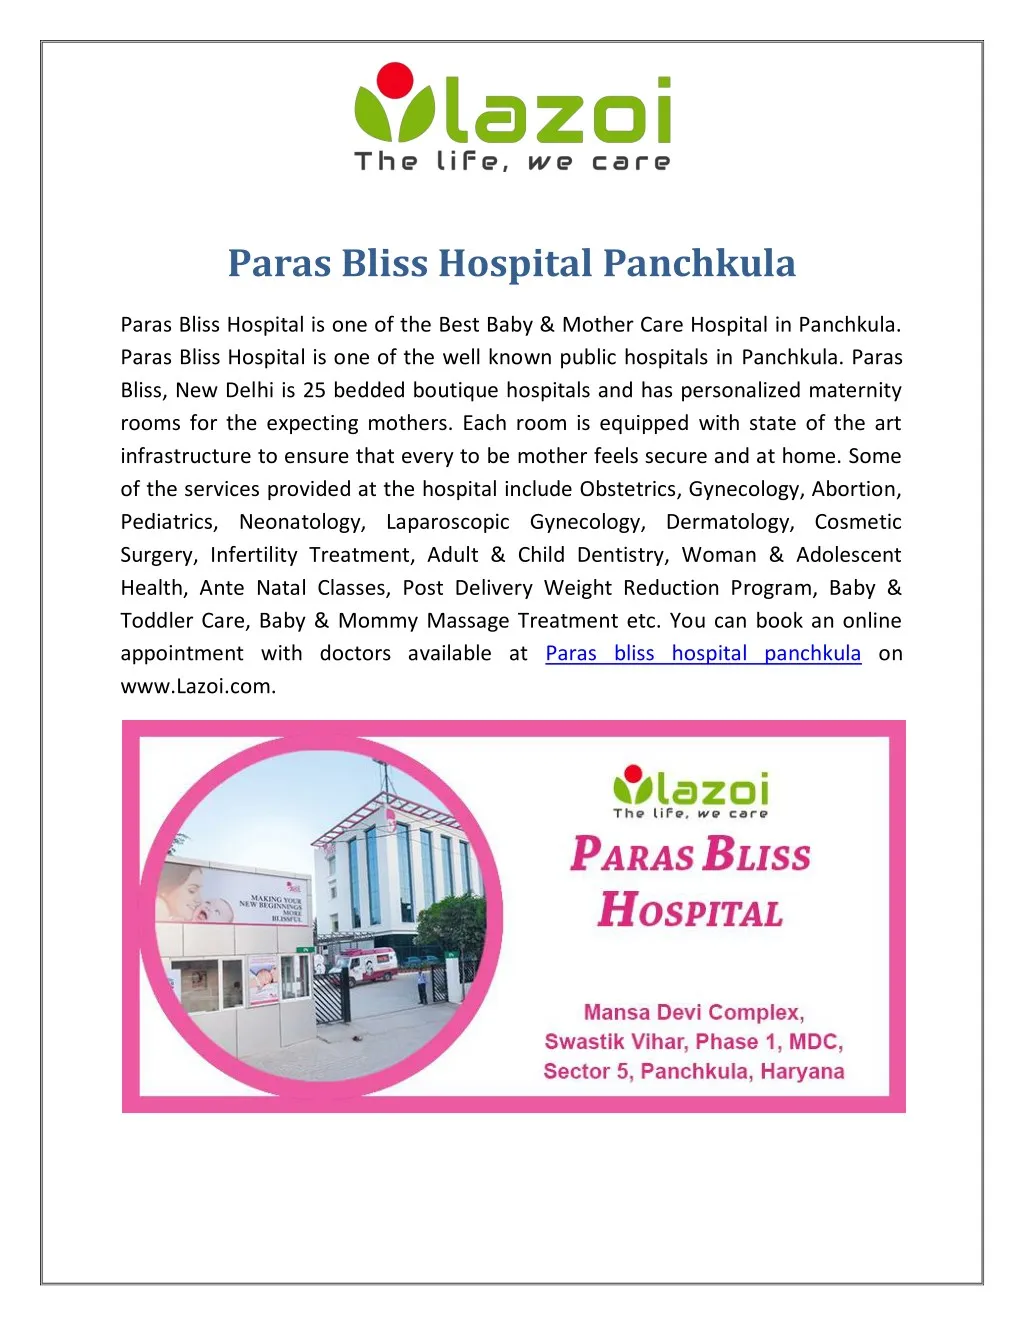 paras bliss hospital panchkula